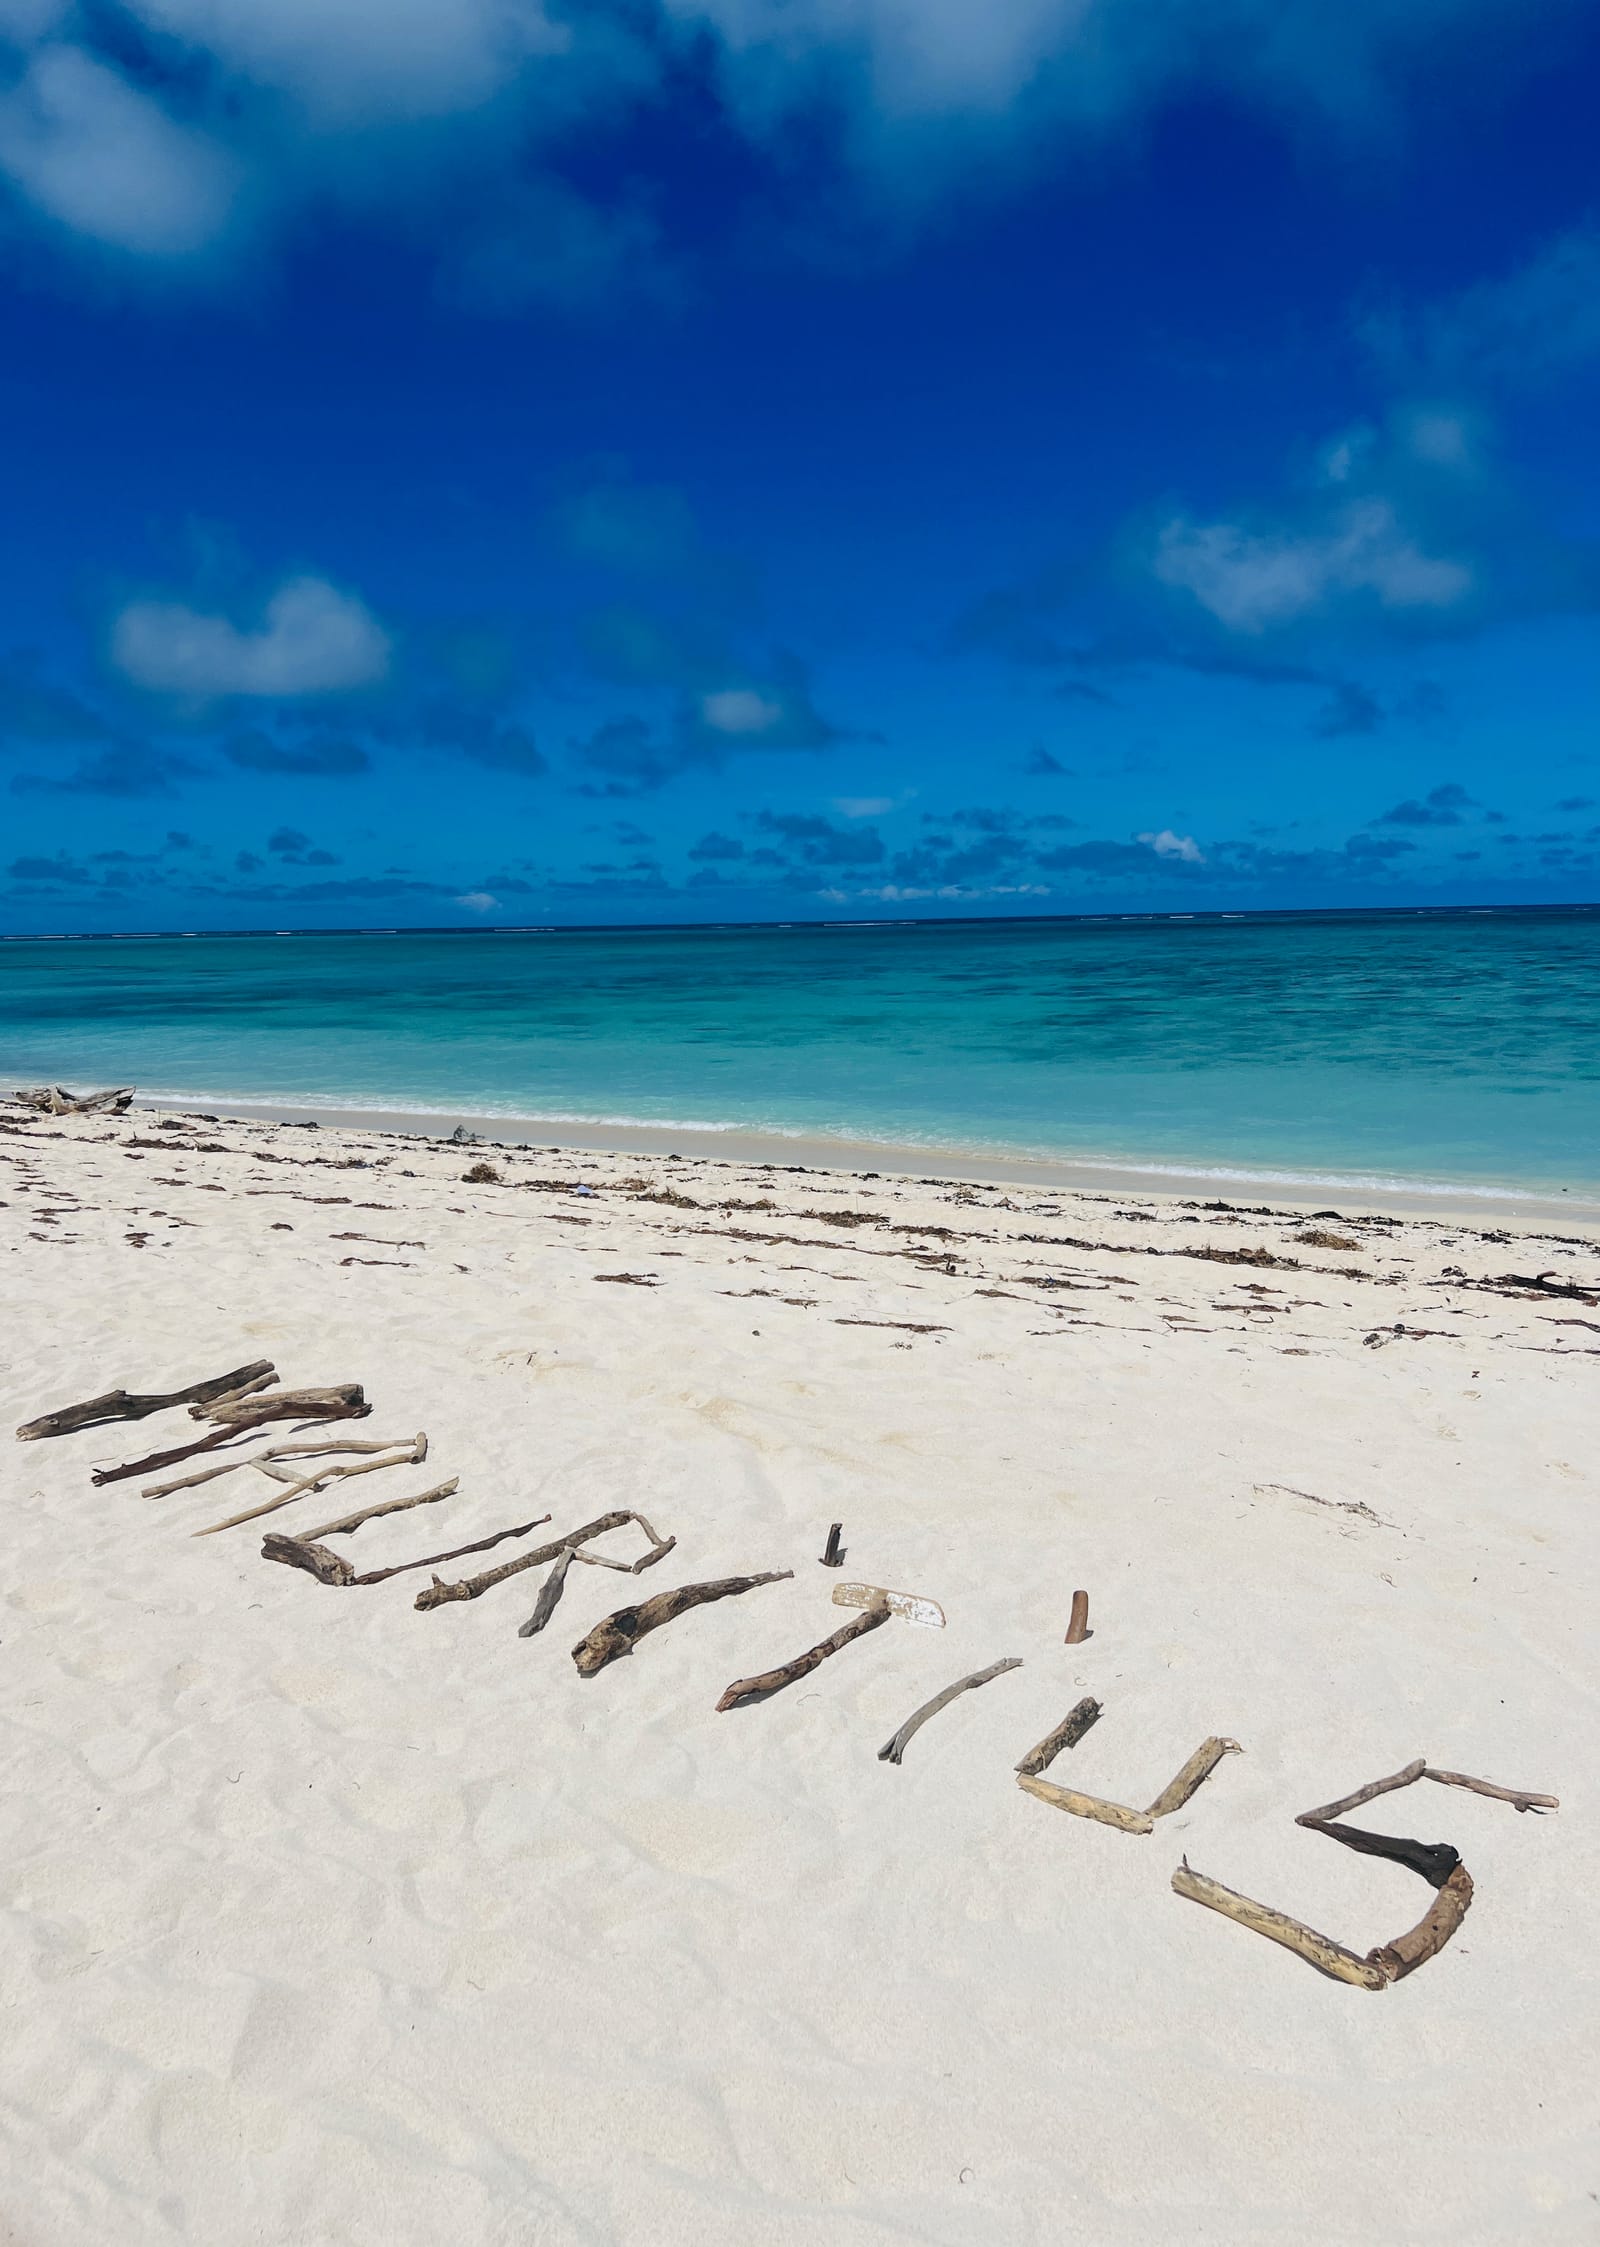 Bine ati venit in paradis,   
Impresii din Mauritius!